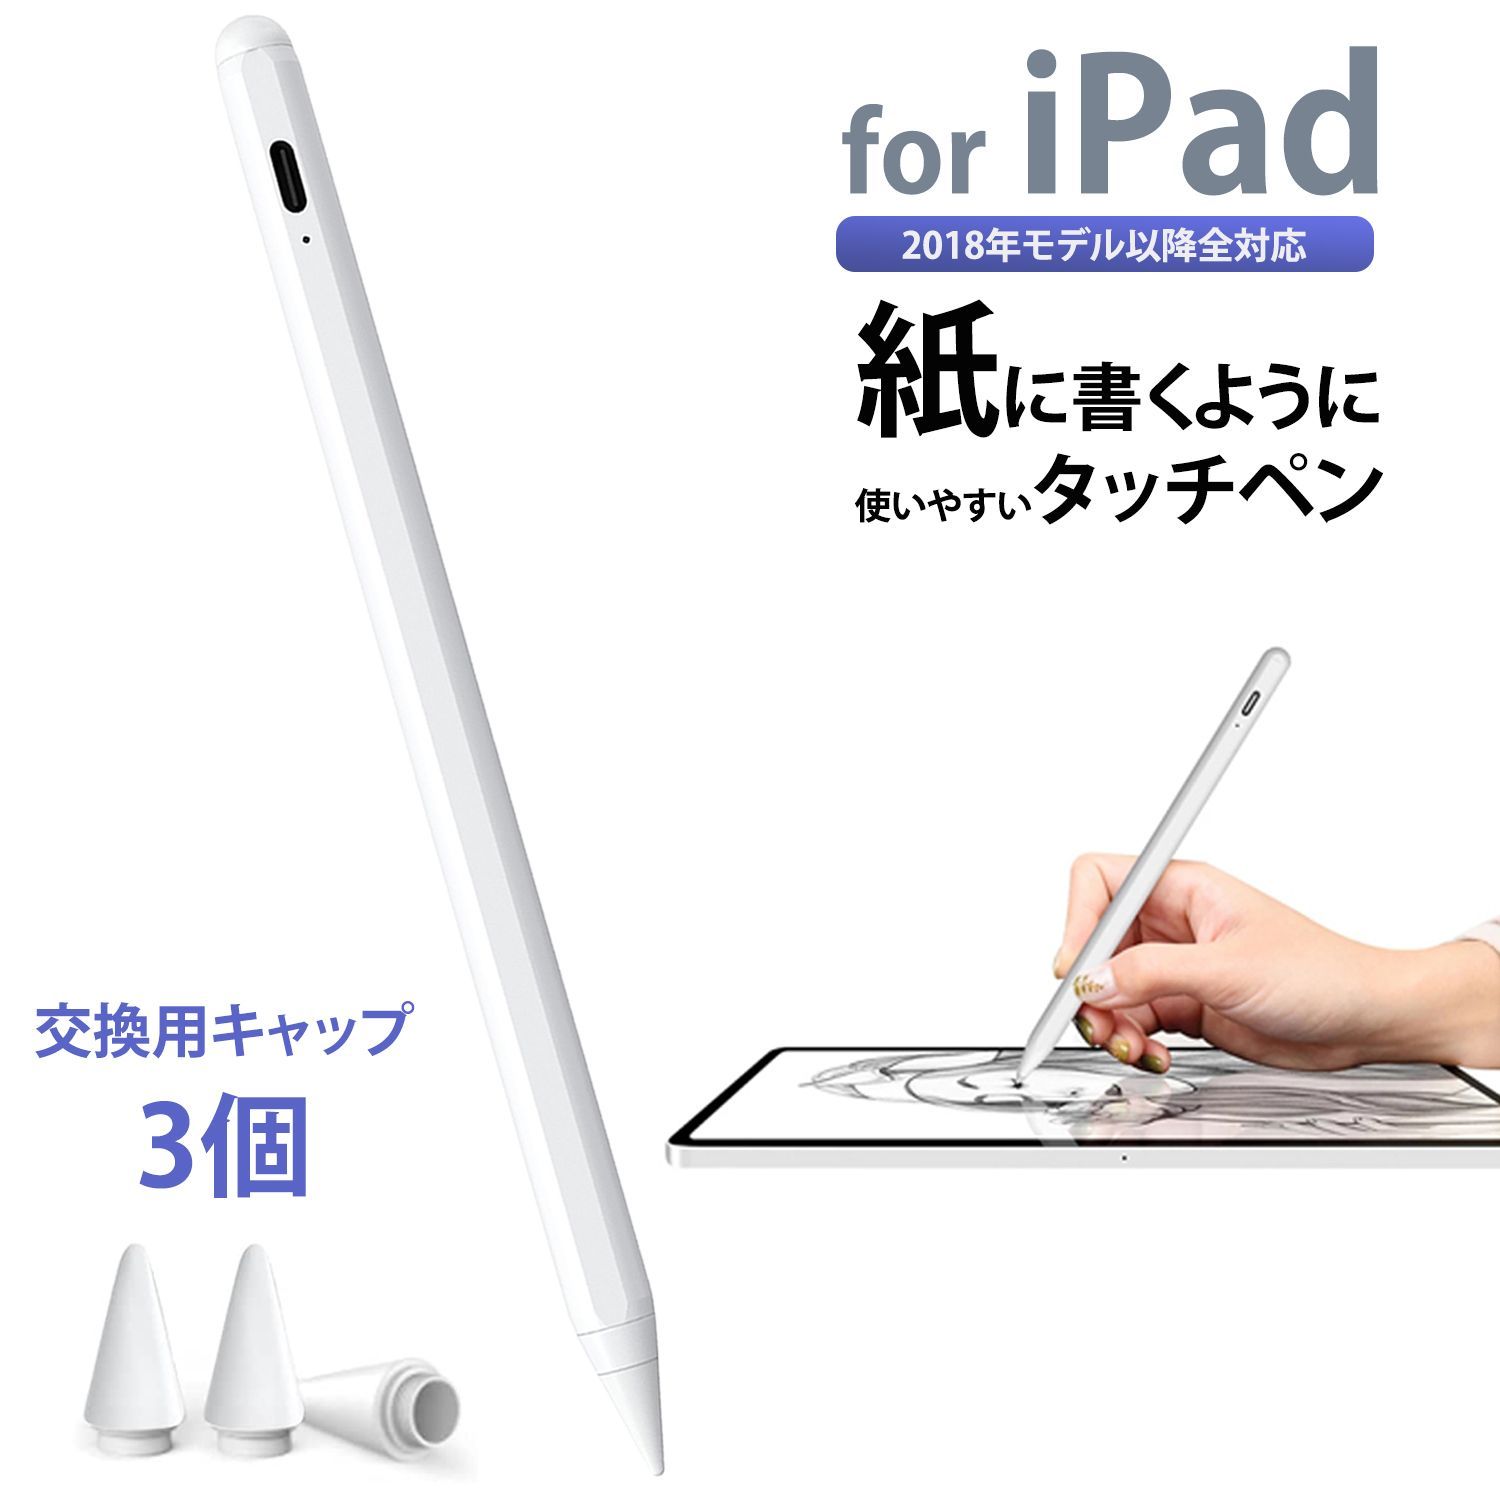 65%OFF【送料無料】 新品未使用 iPadタッチペン stylus pen 桜色